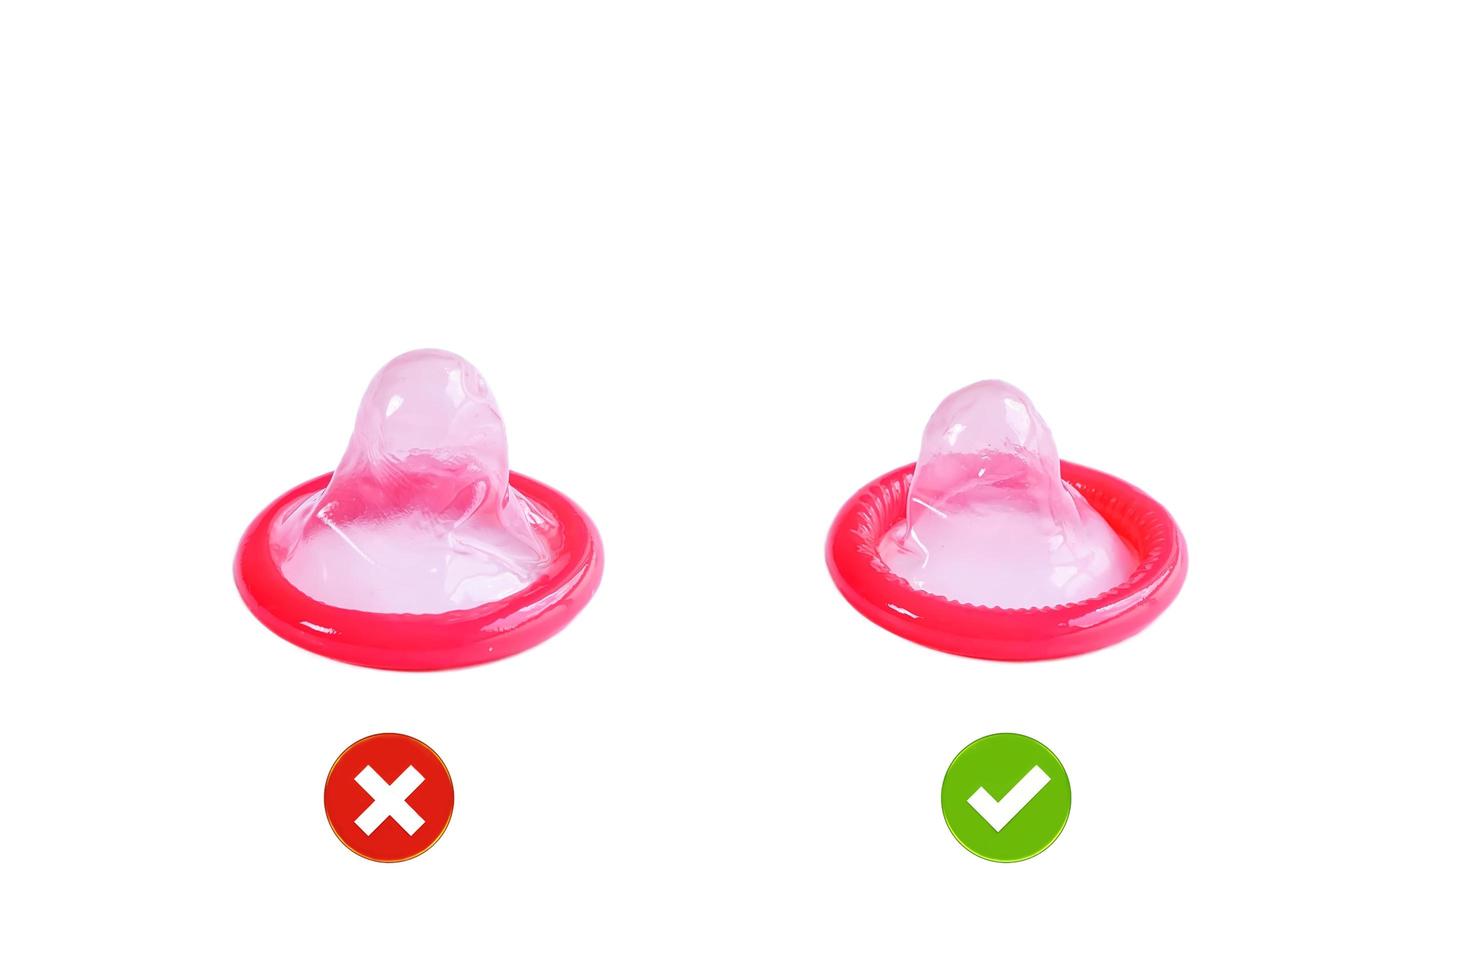 How to put condom correctly photo